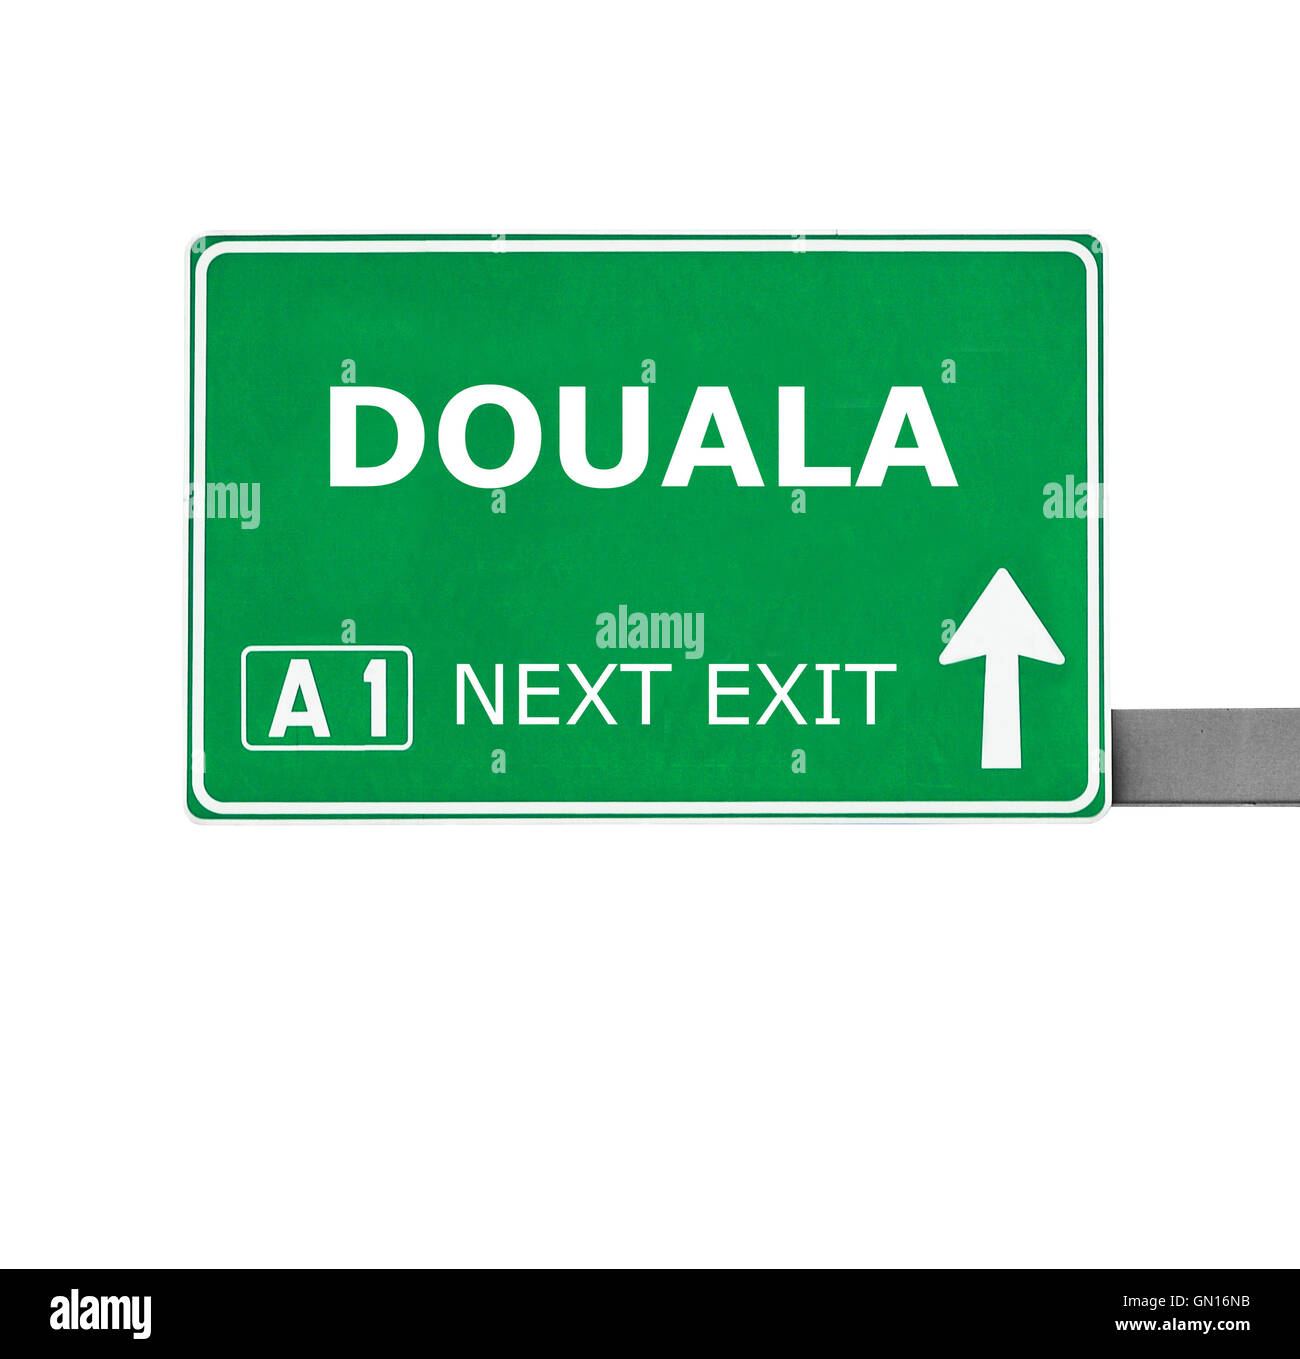 DOUALA road sign isolated on white Stock Photo